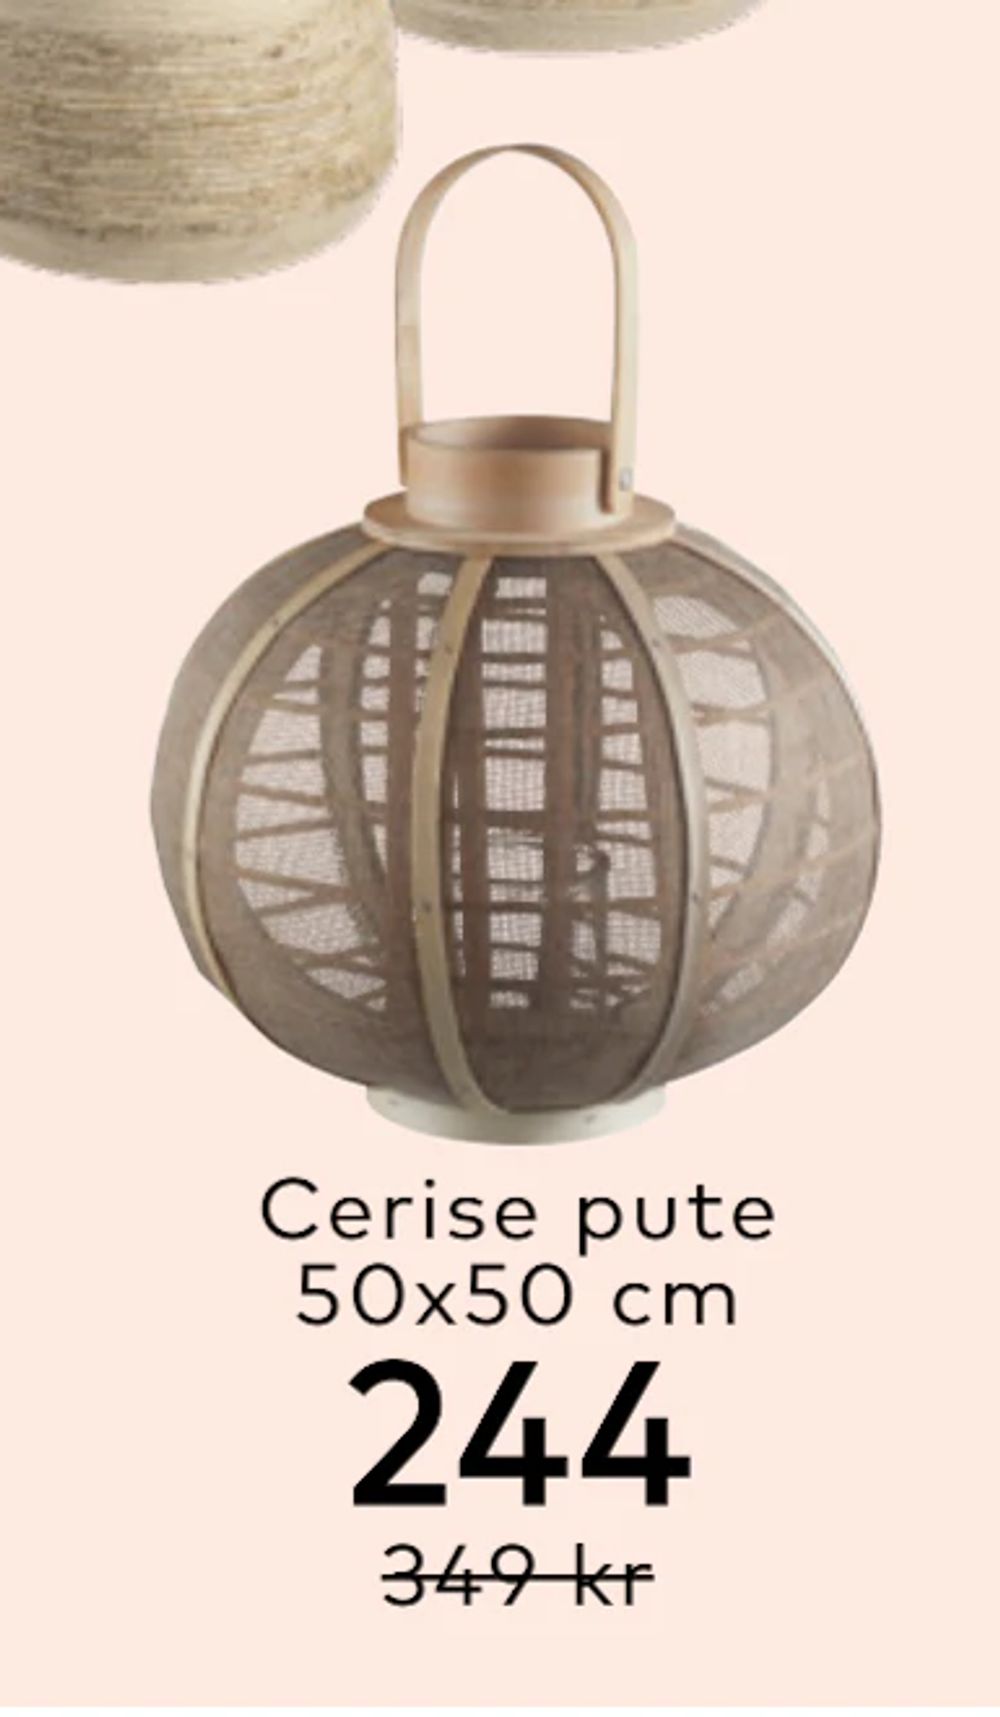 Tilbud på Cerise pute 50x50 cm fra Skeidar til 244 kr